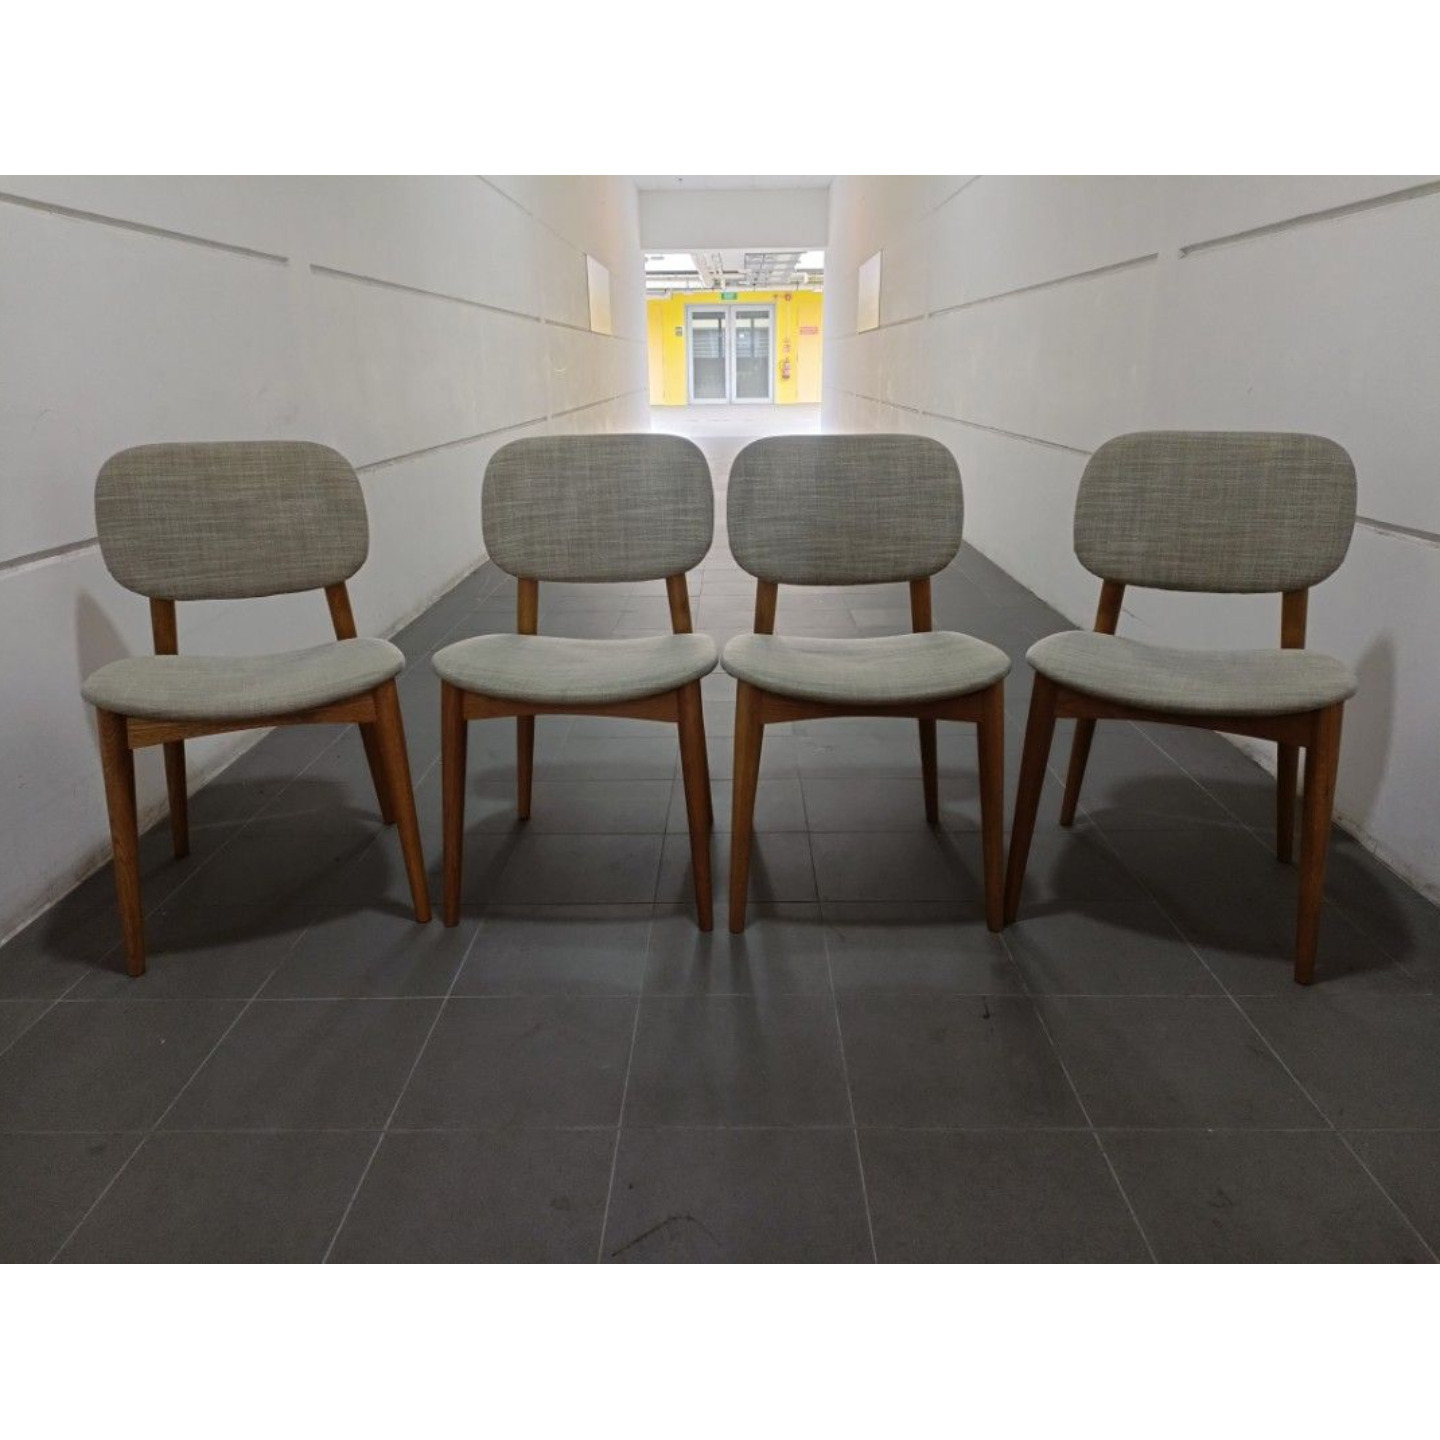 4 x ELSIE Wooden Dining Chairs in WALNUT & Titanium Grey Fabric